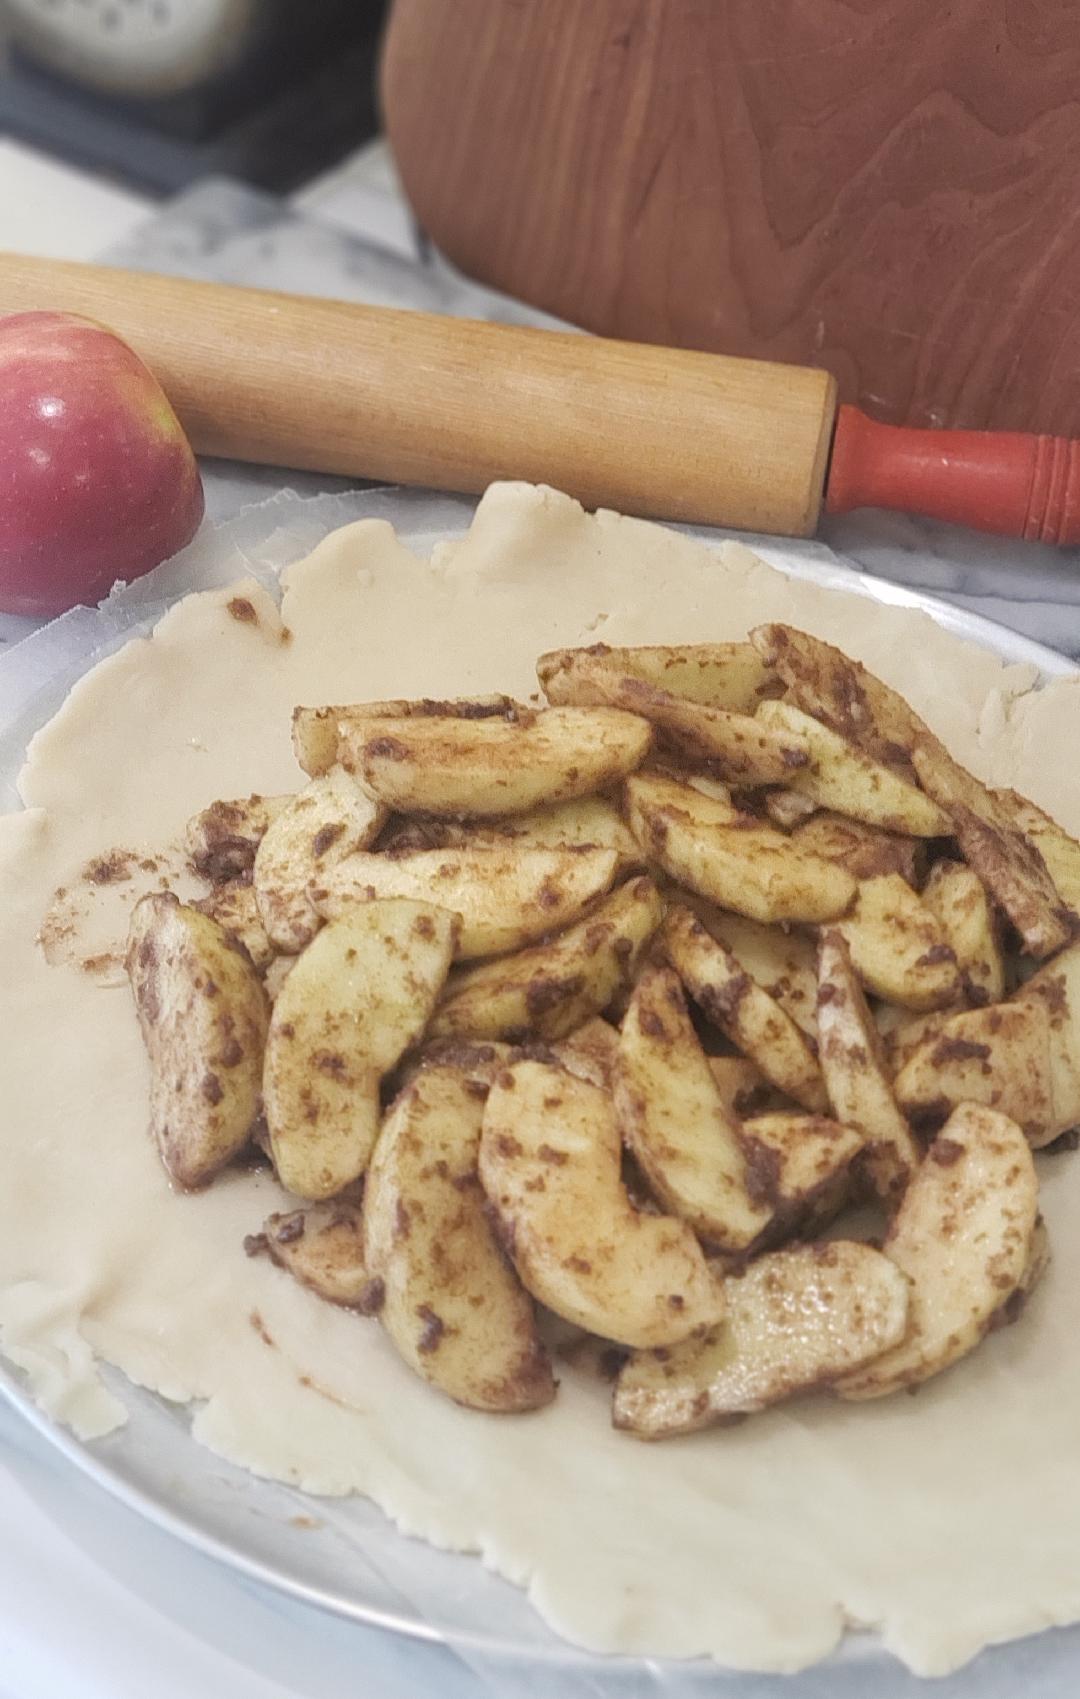 Tart crust with apples